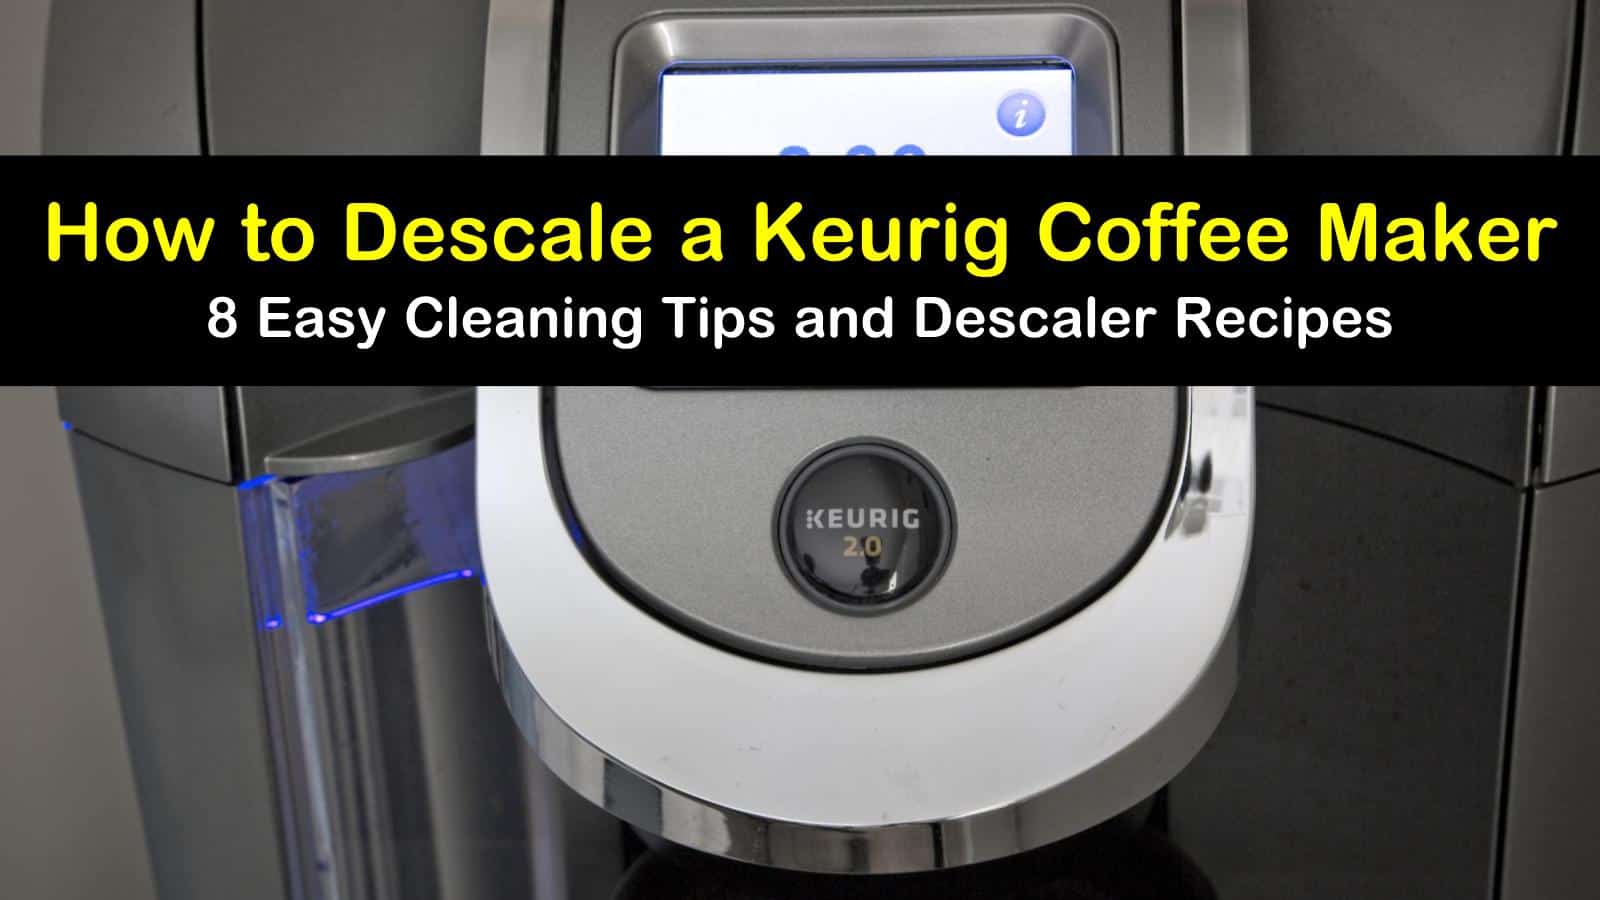 how to descale a Keurig coffee maker titleimg1